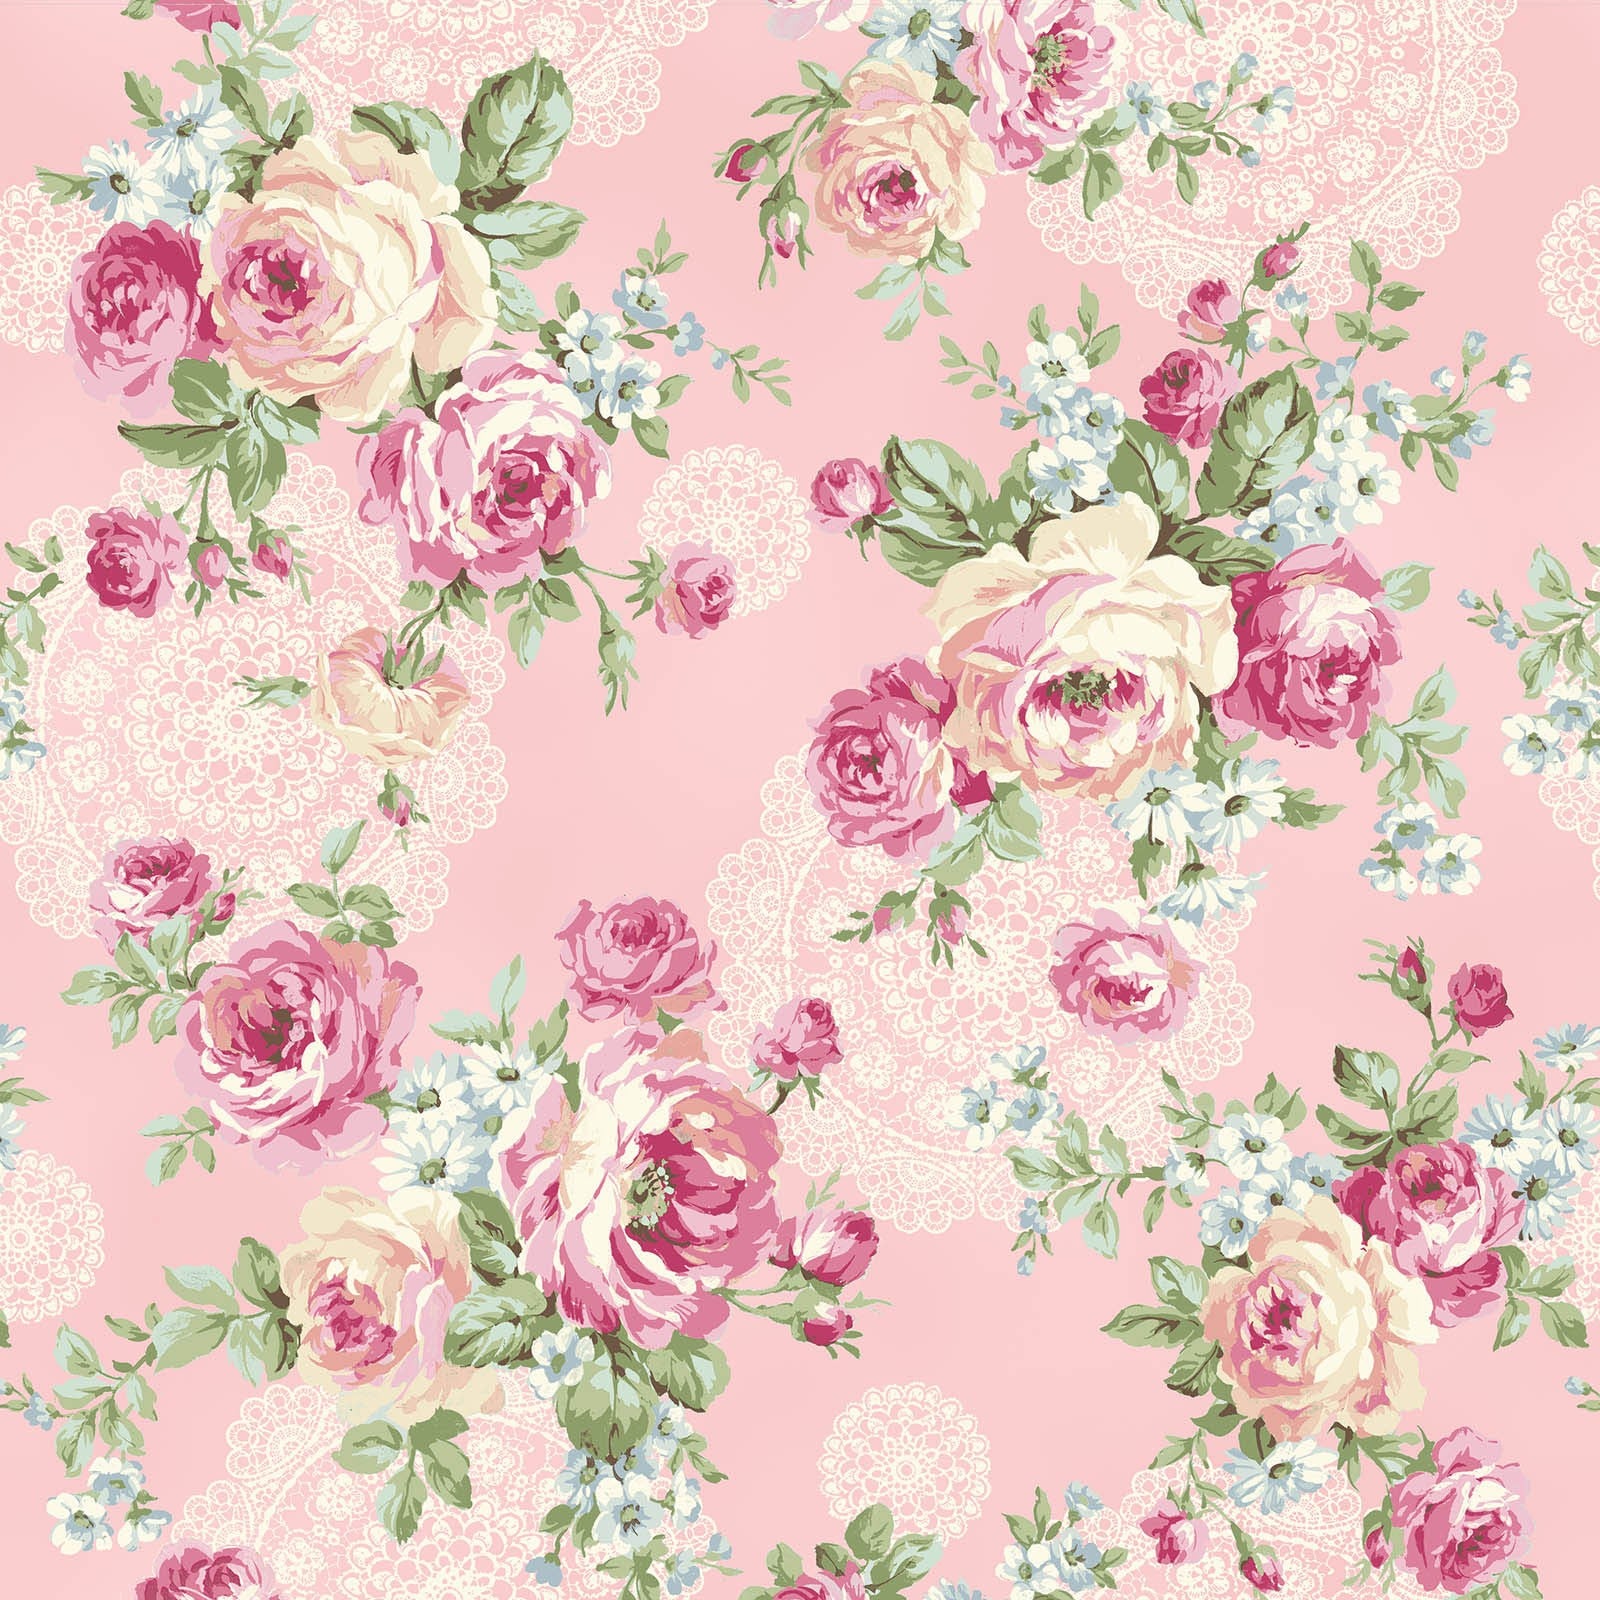 Rose Waltz RuRu Bouquet cotton fabric by Quilt Gate Ru2450-11B Roses on Pink